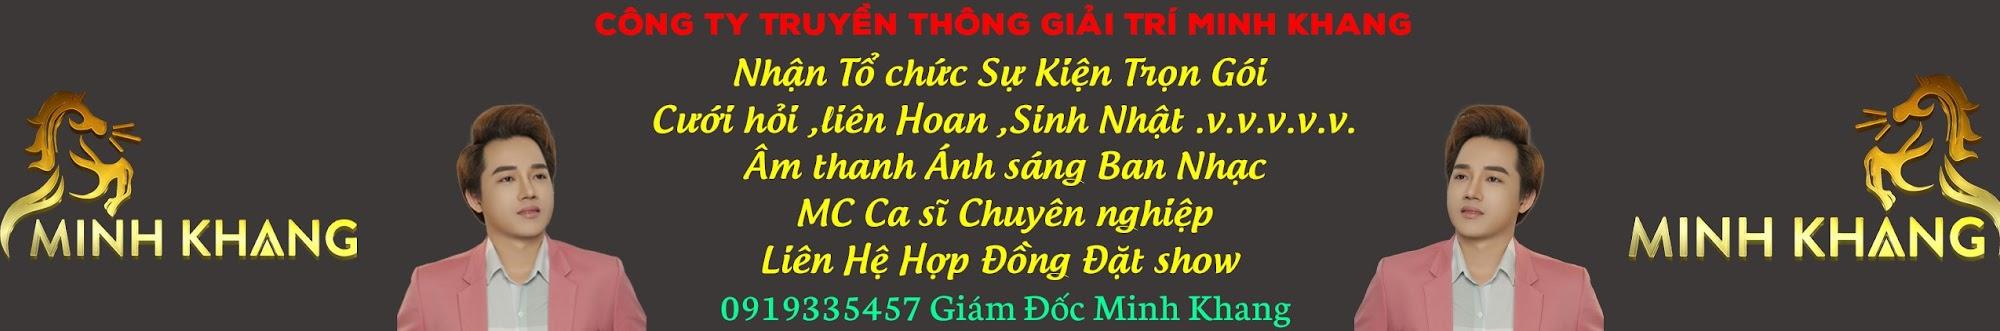 MINH KHANG ENTERTAINMENT